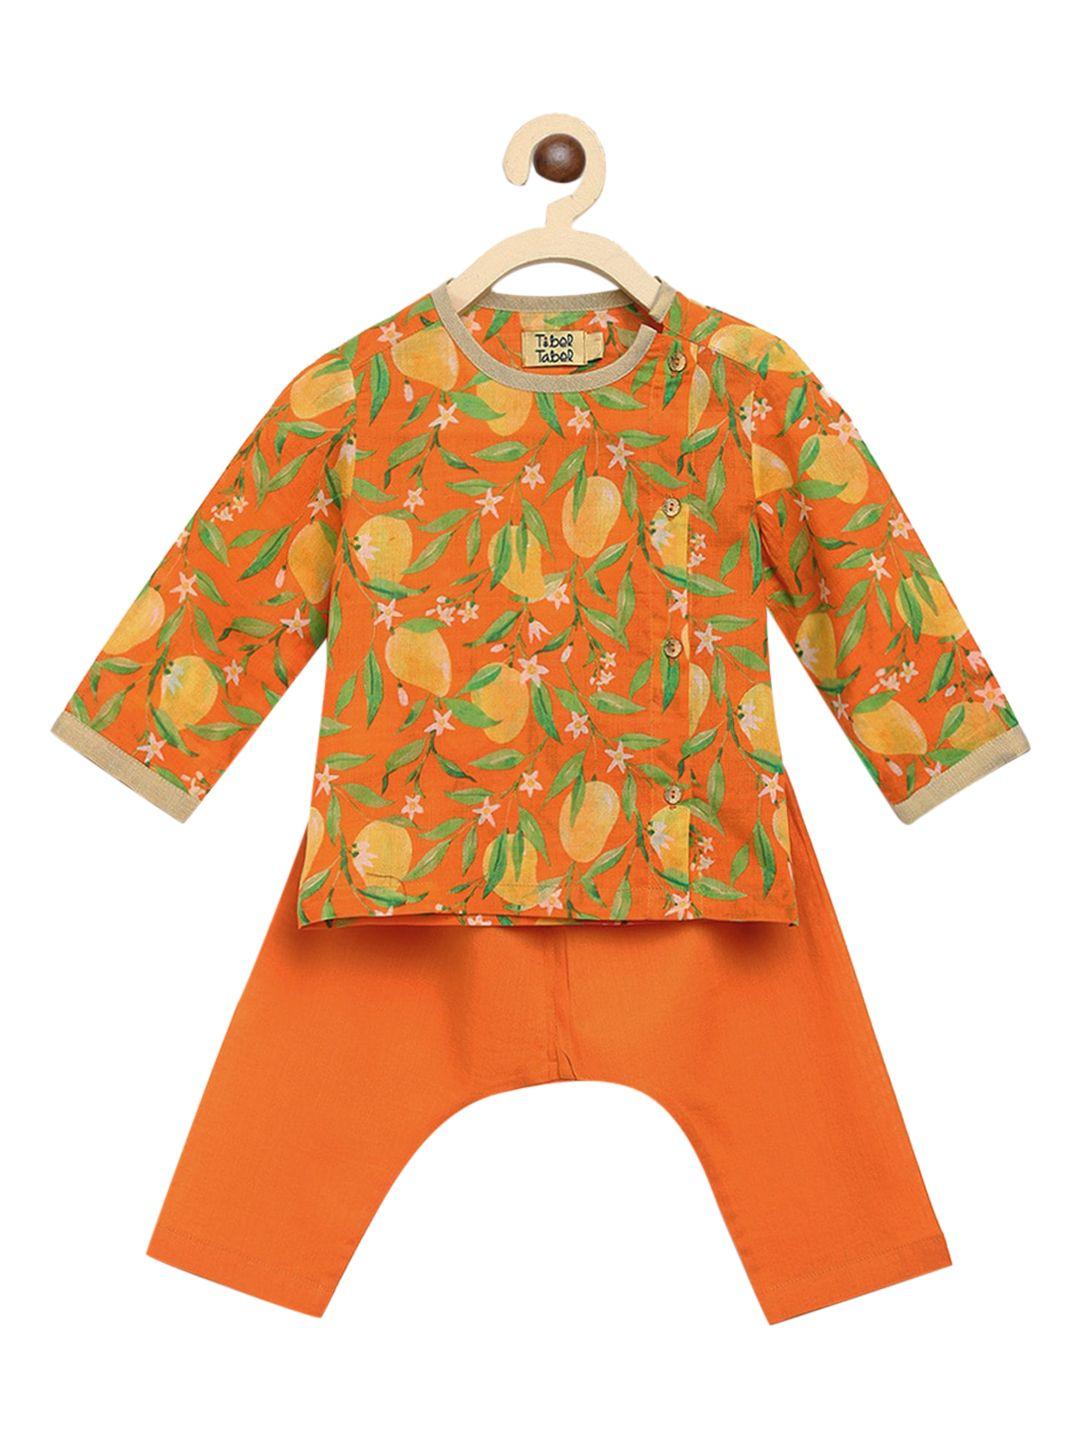 tiber taber boys orange clothing set